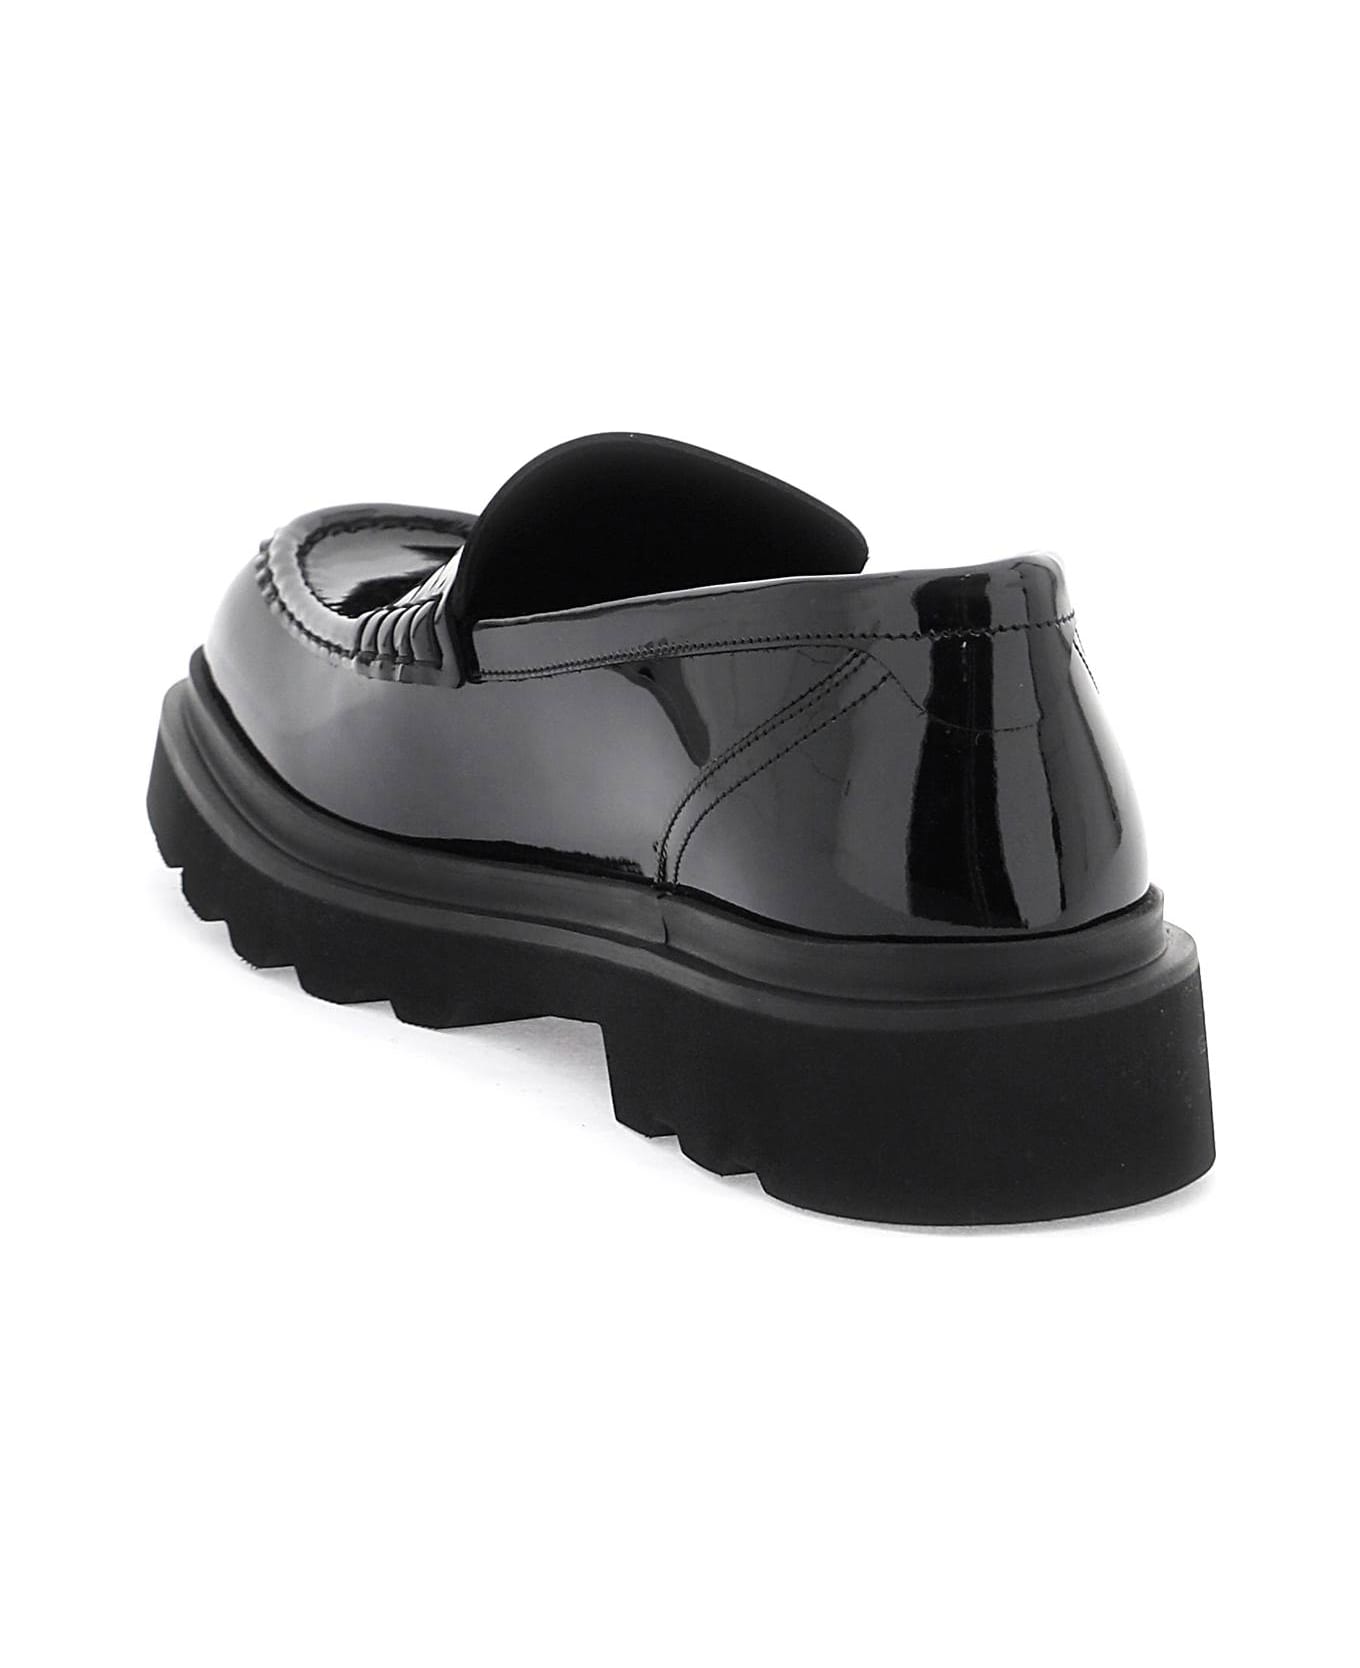 Dolce & Gabbana Patent Leather Mocassins - NERO (Black)